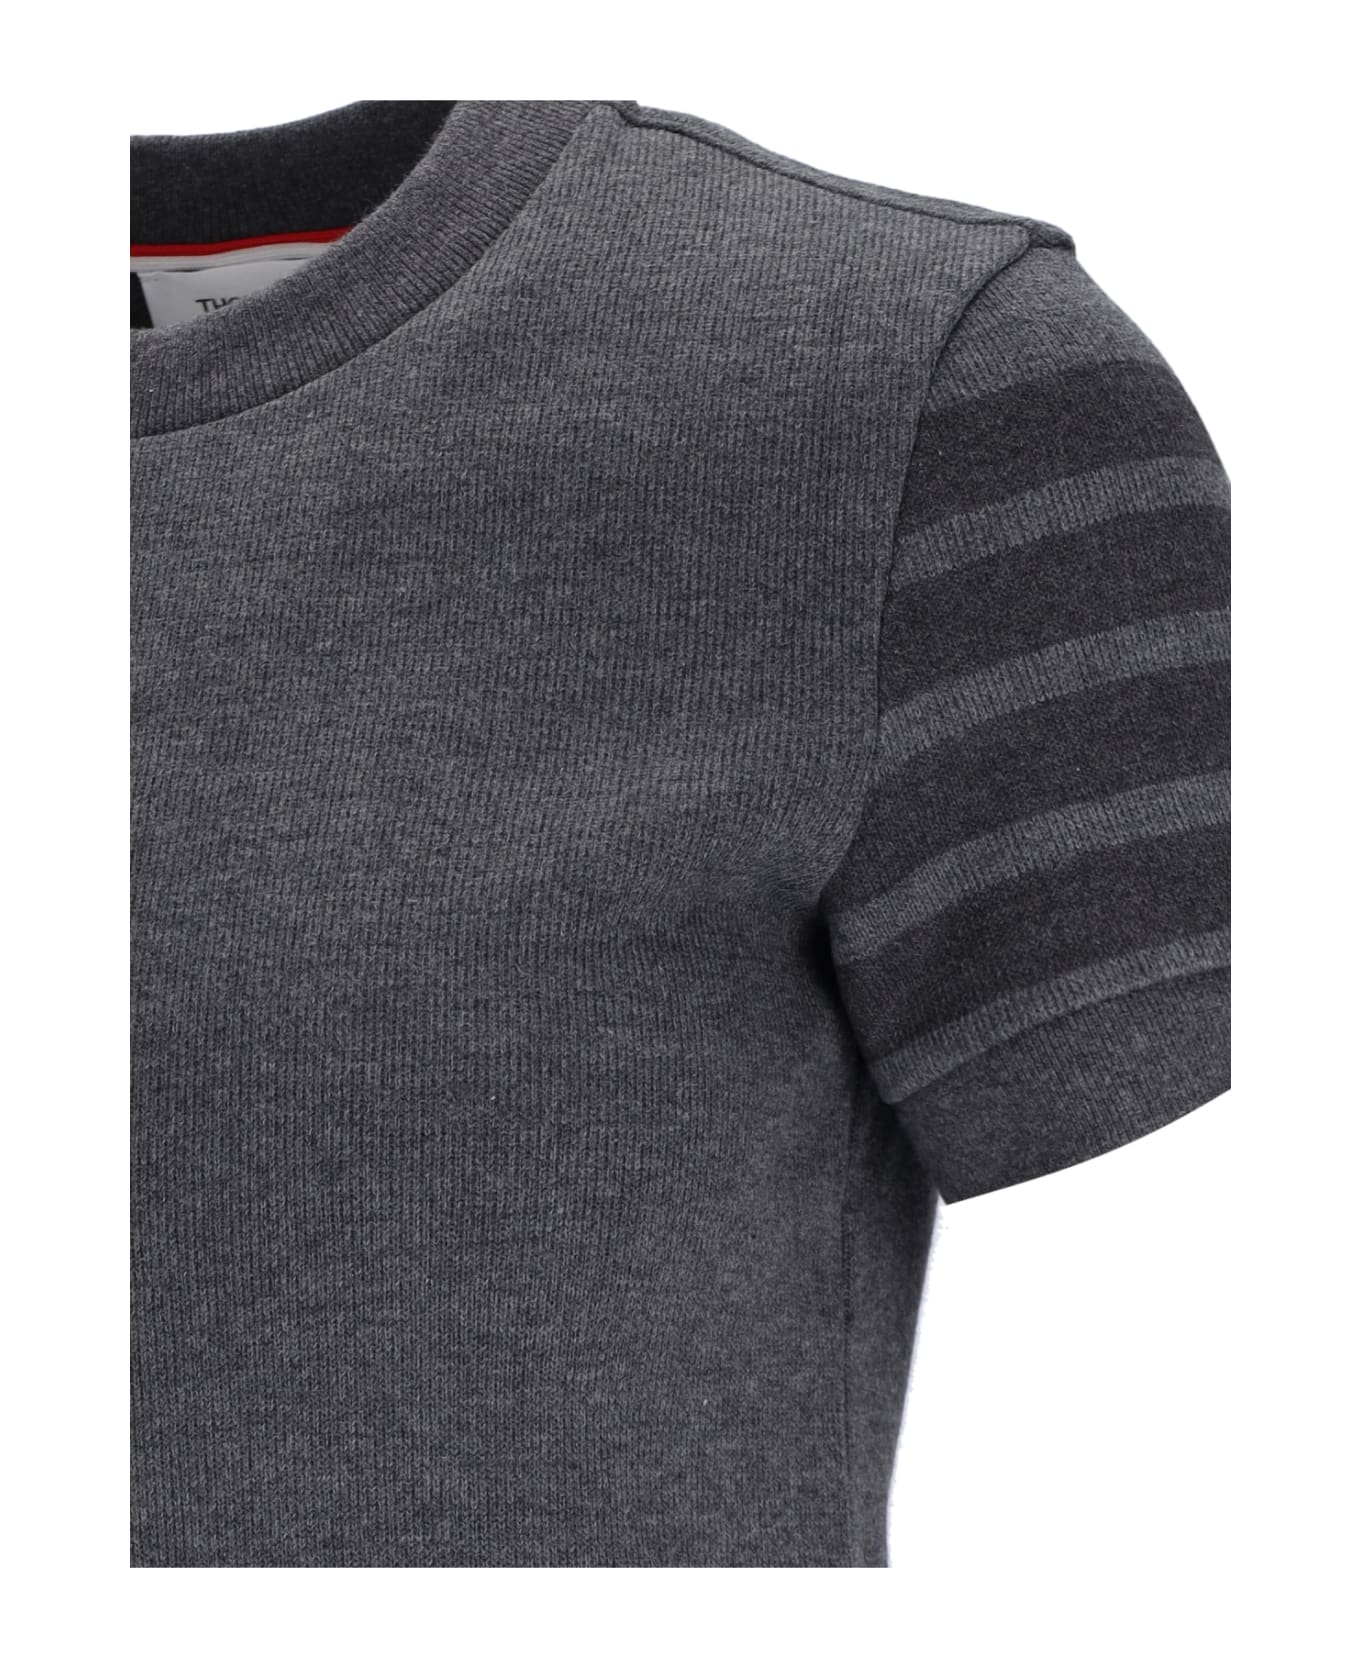 Thom Browne Short Sleeve Sweater - Gray